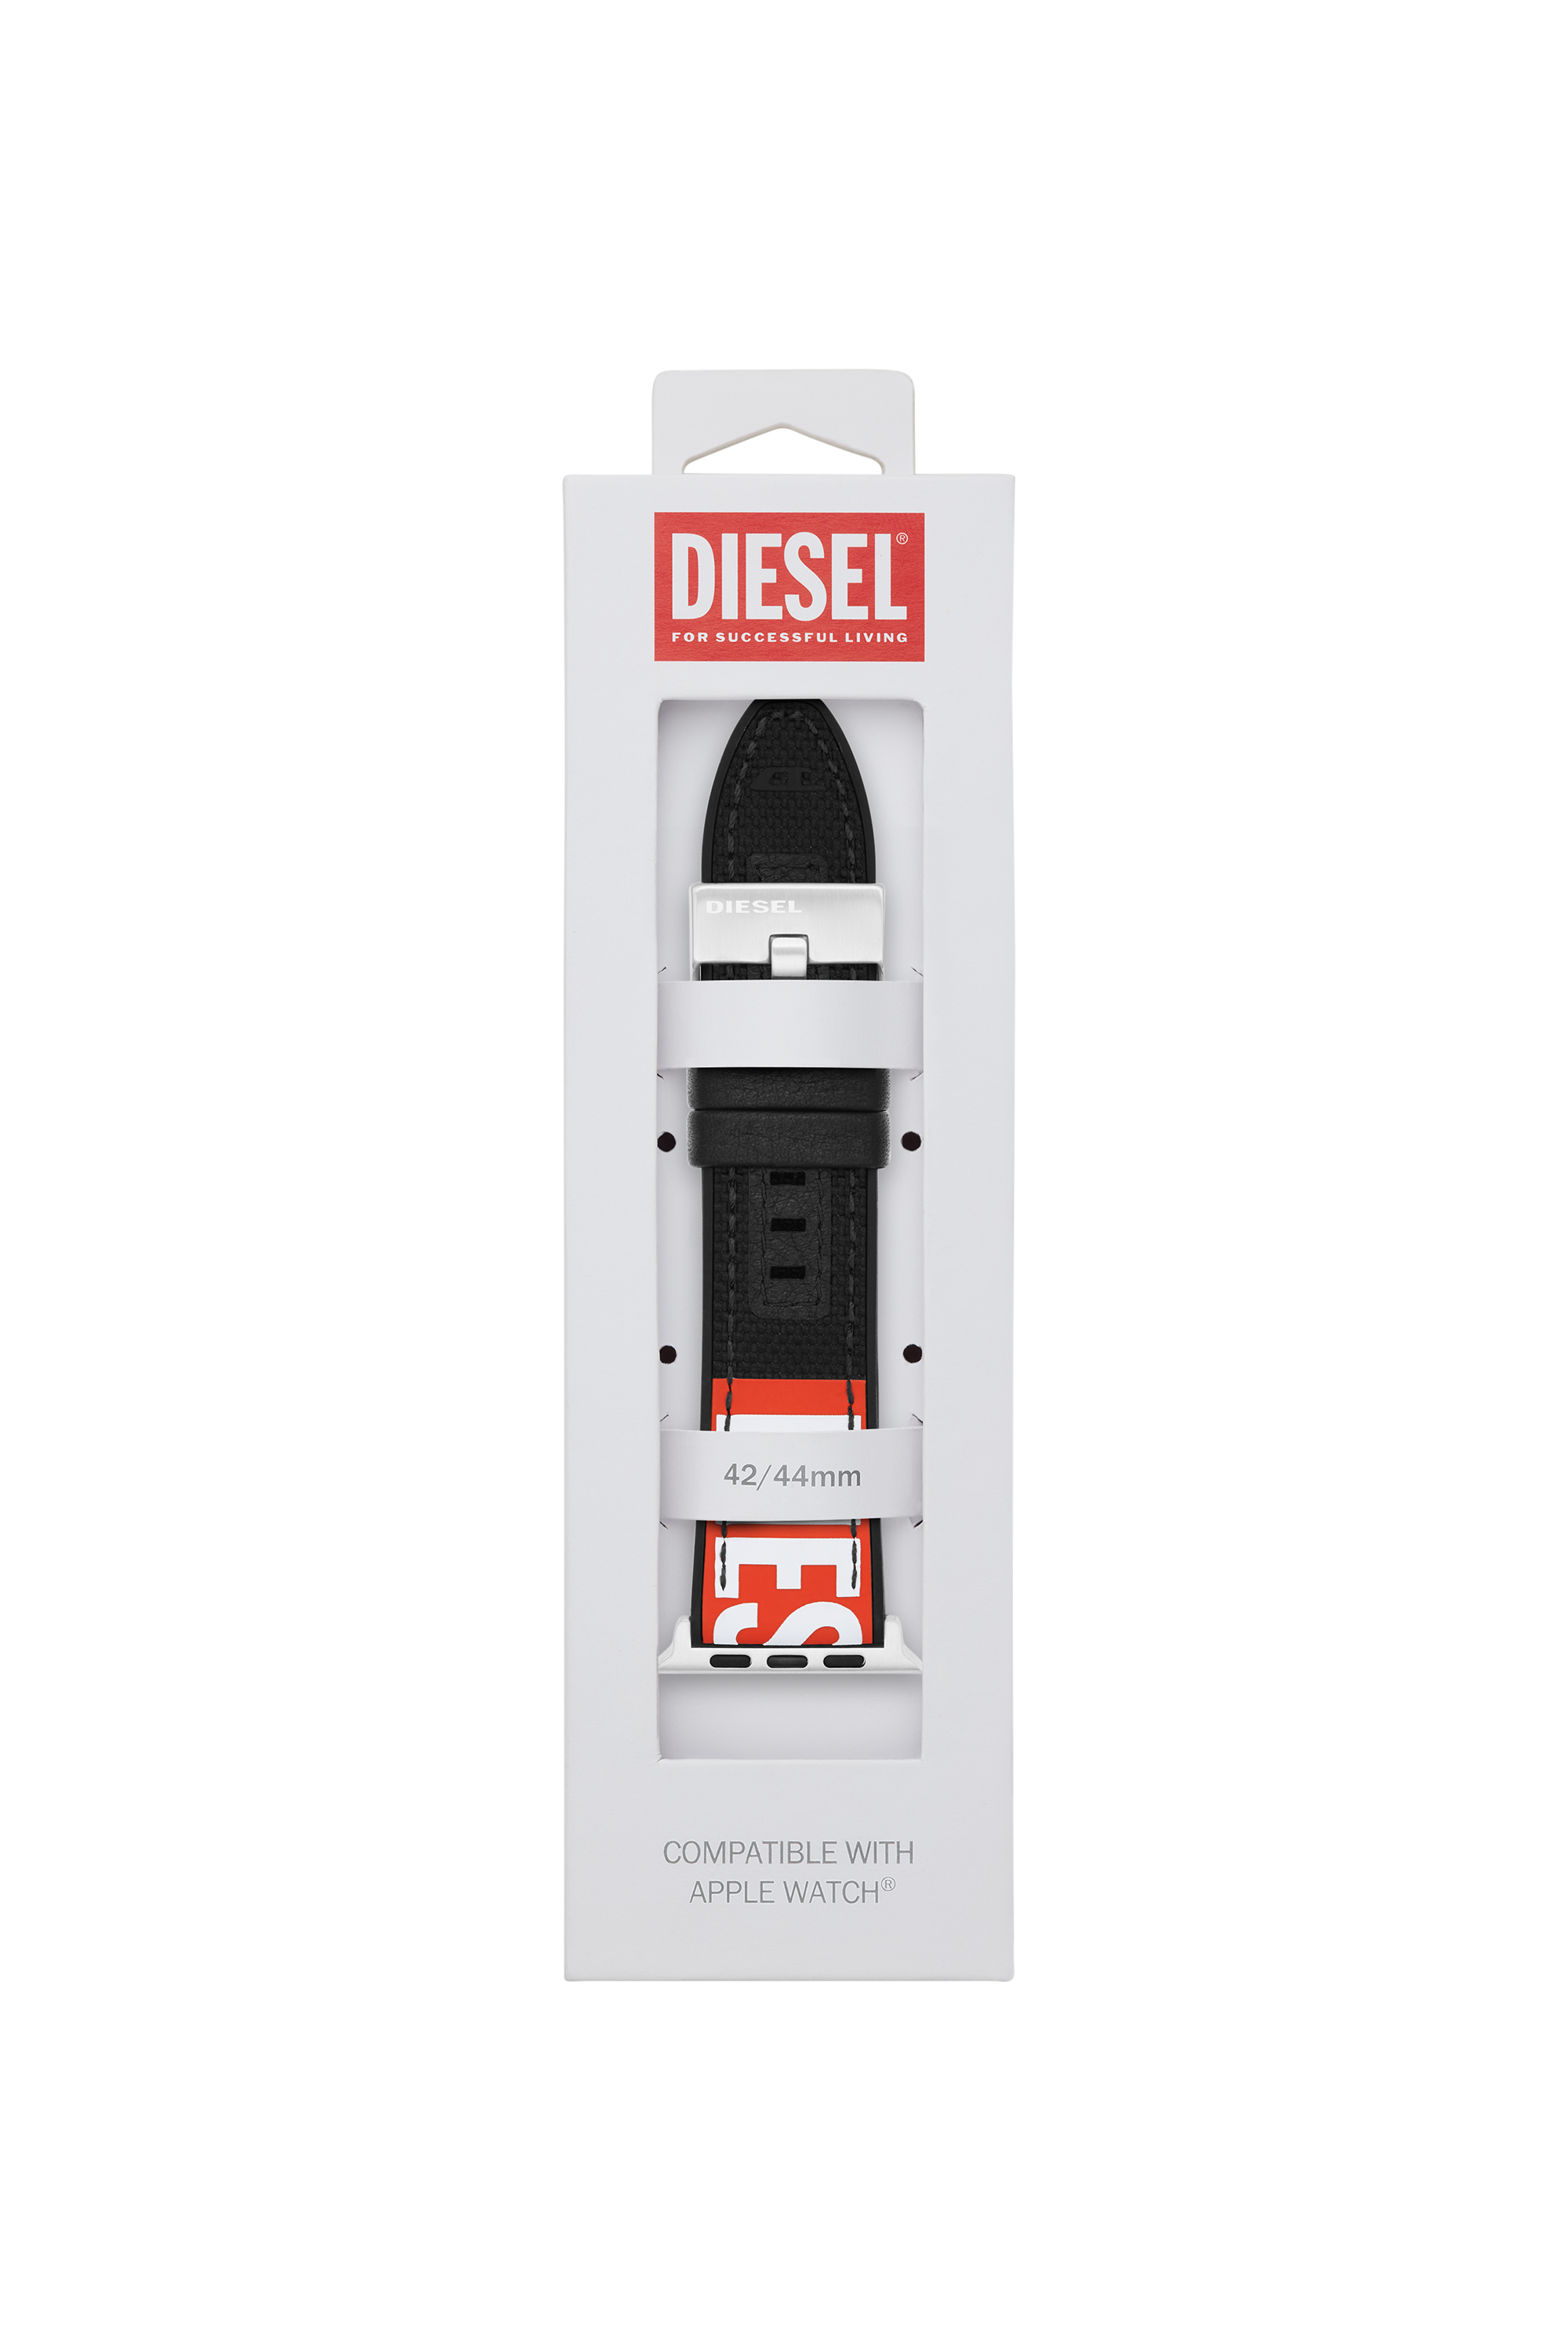 Diesel - DSS005, ブラック - Image 2